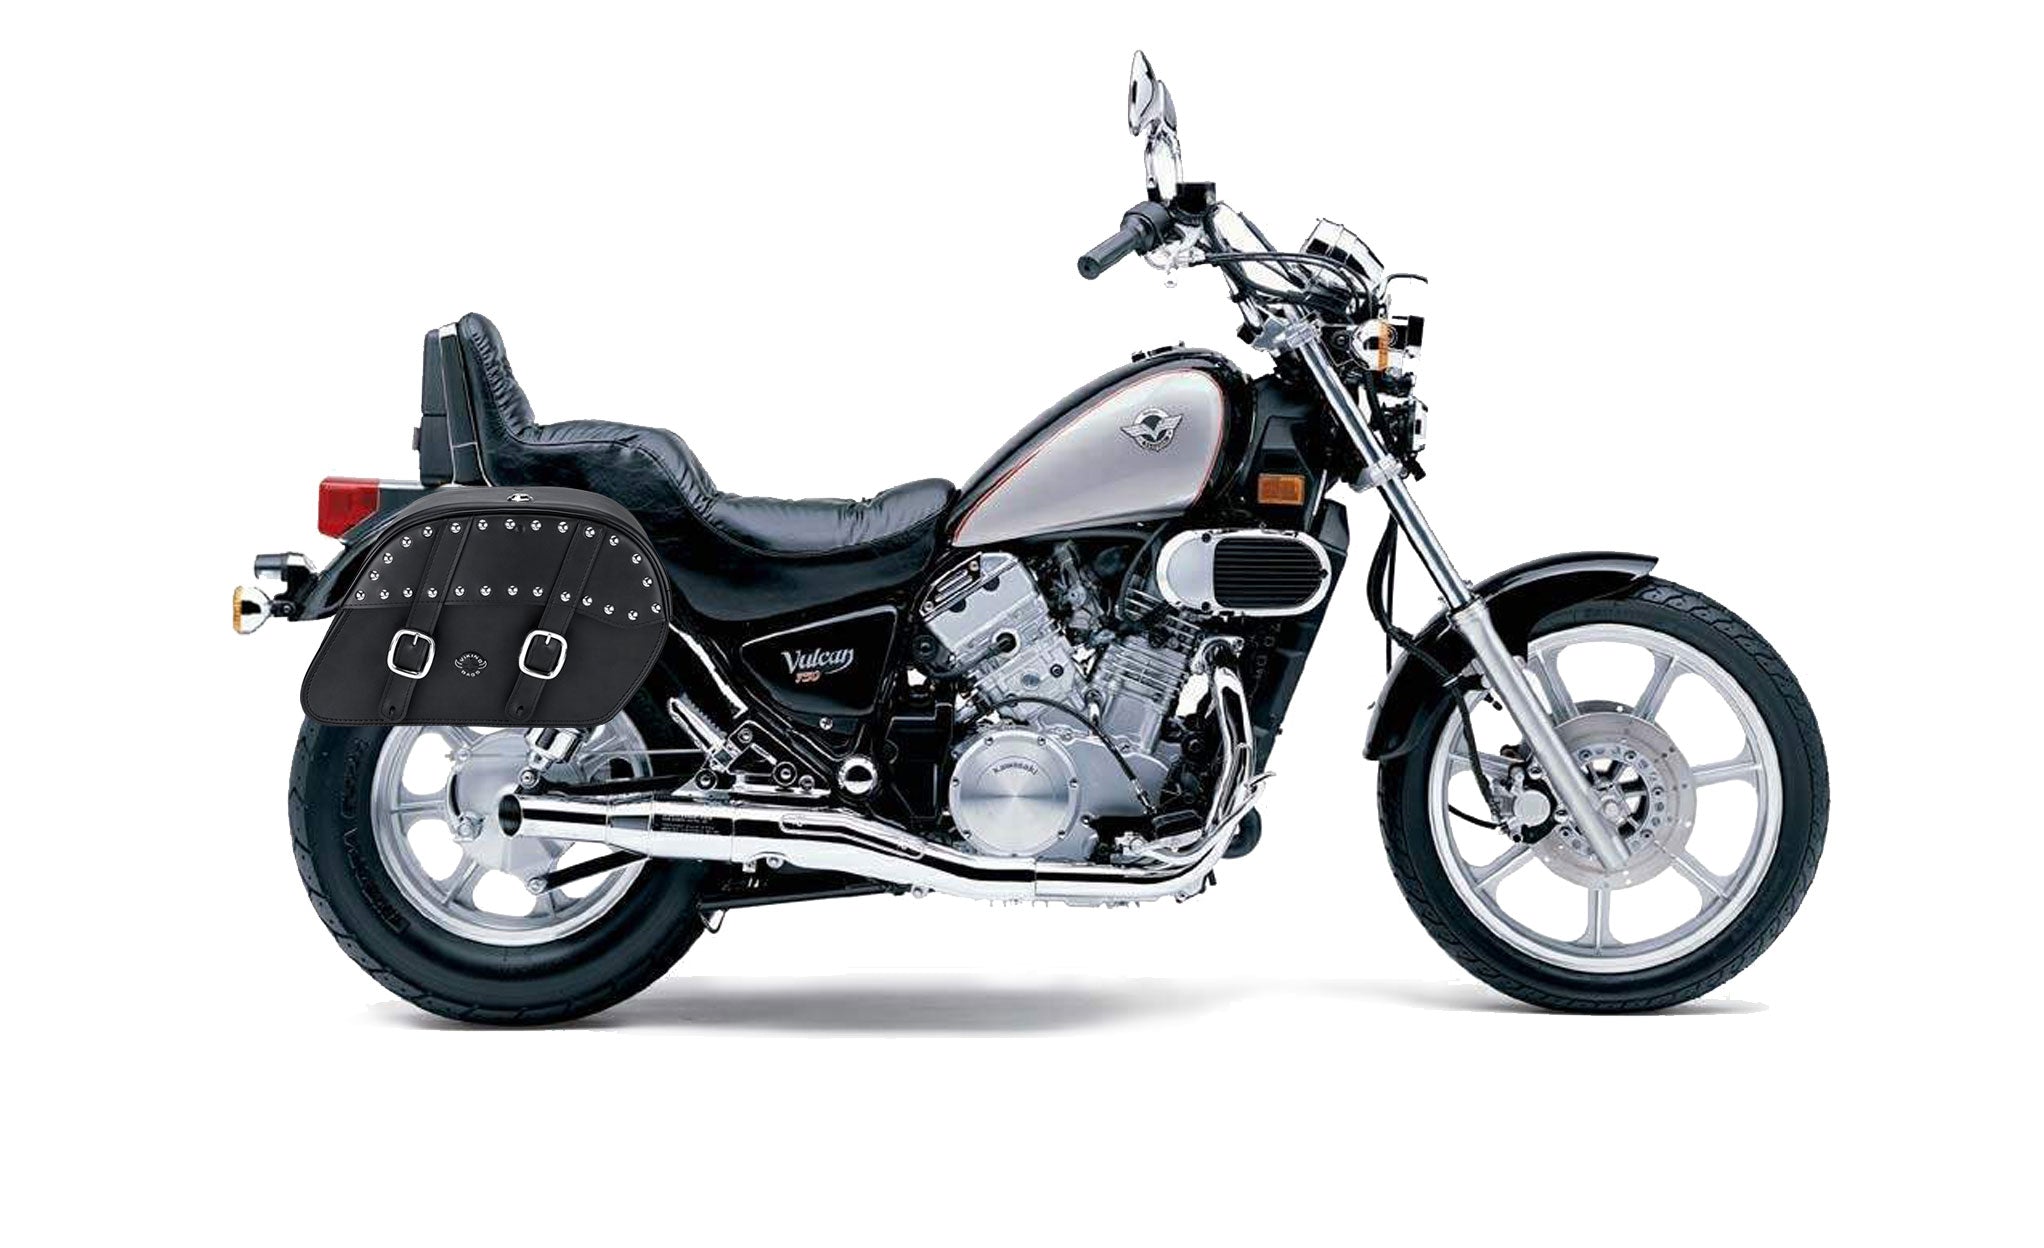 Viking Skarner Large Kawasaki Vulcan 750 Vn750 Leather Studded Motorcycle Saddlebags on Bike Photo @expand